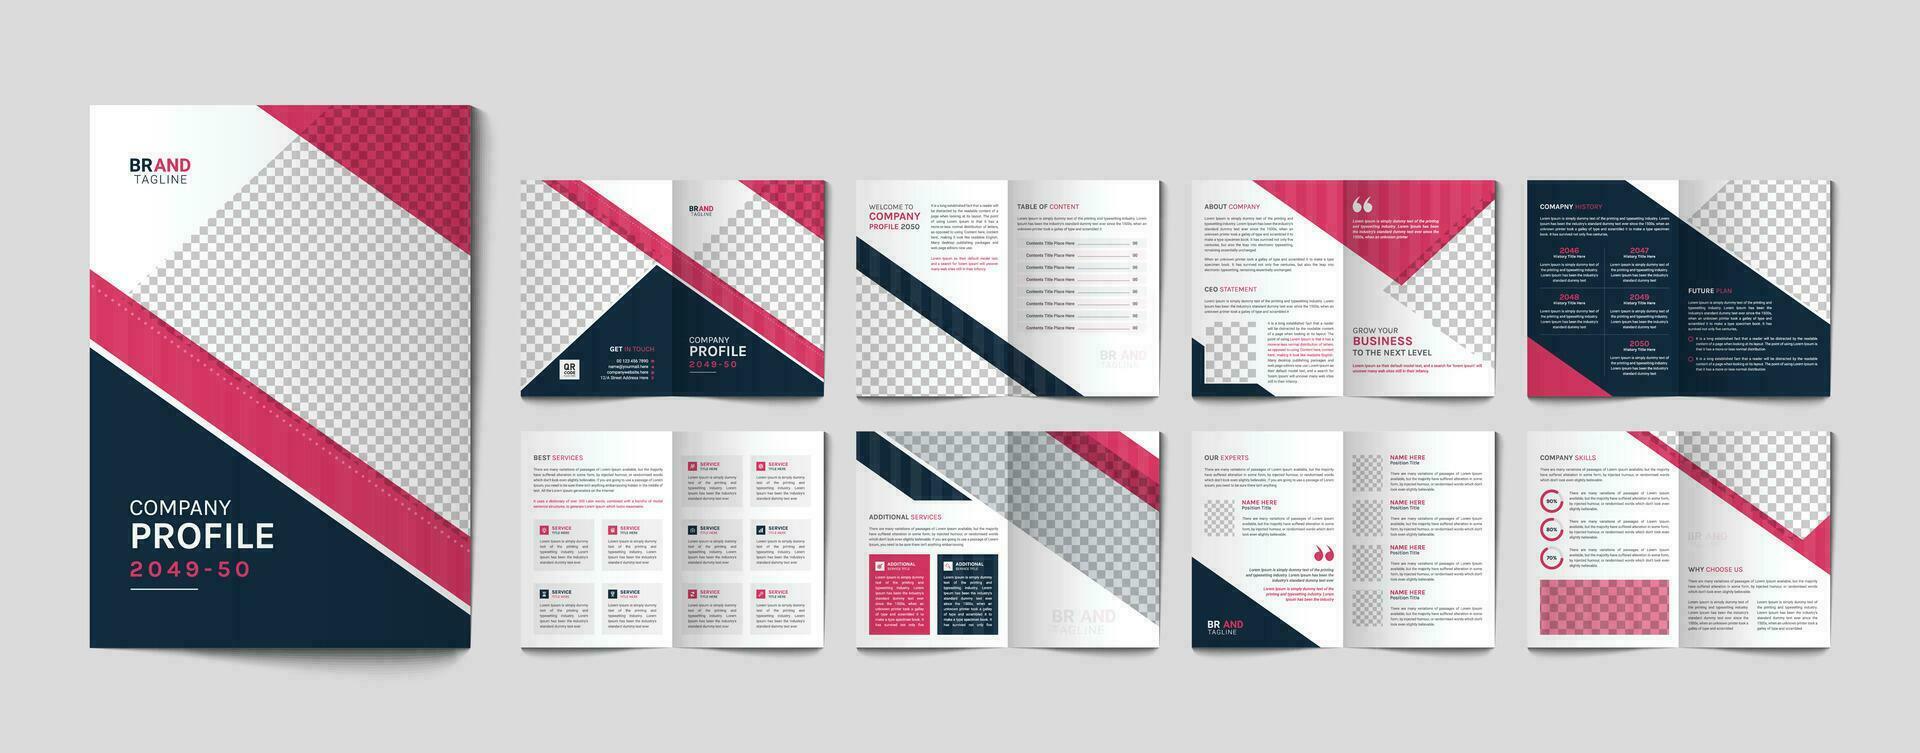 empresa perfil anual reporte negocio propuesta corporativo bifold folleto diseño modelo vector